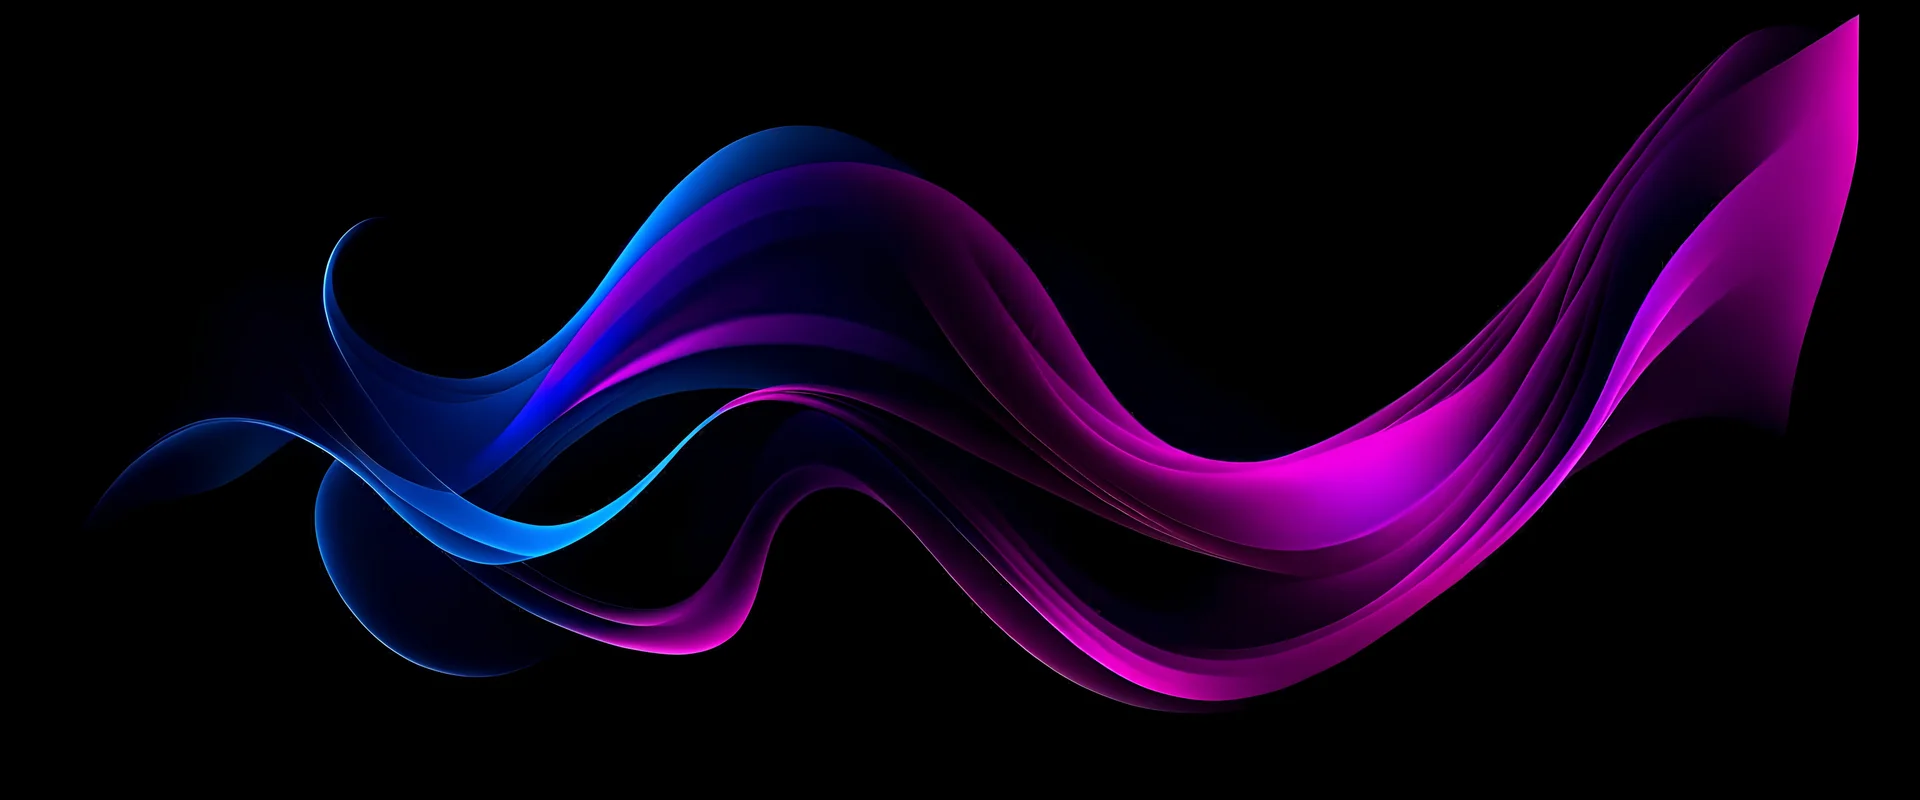 Purple pink blue abstract dynamic color flow wave black background grainy texture banner website header design